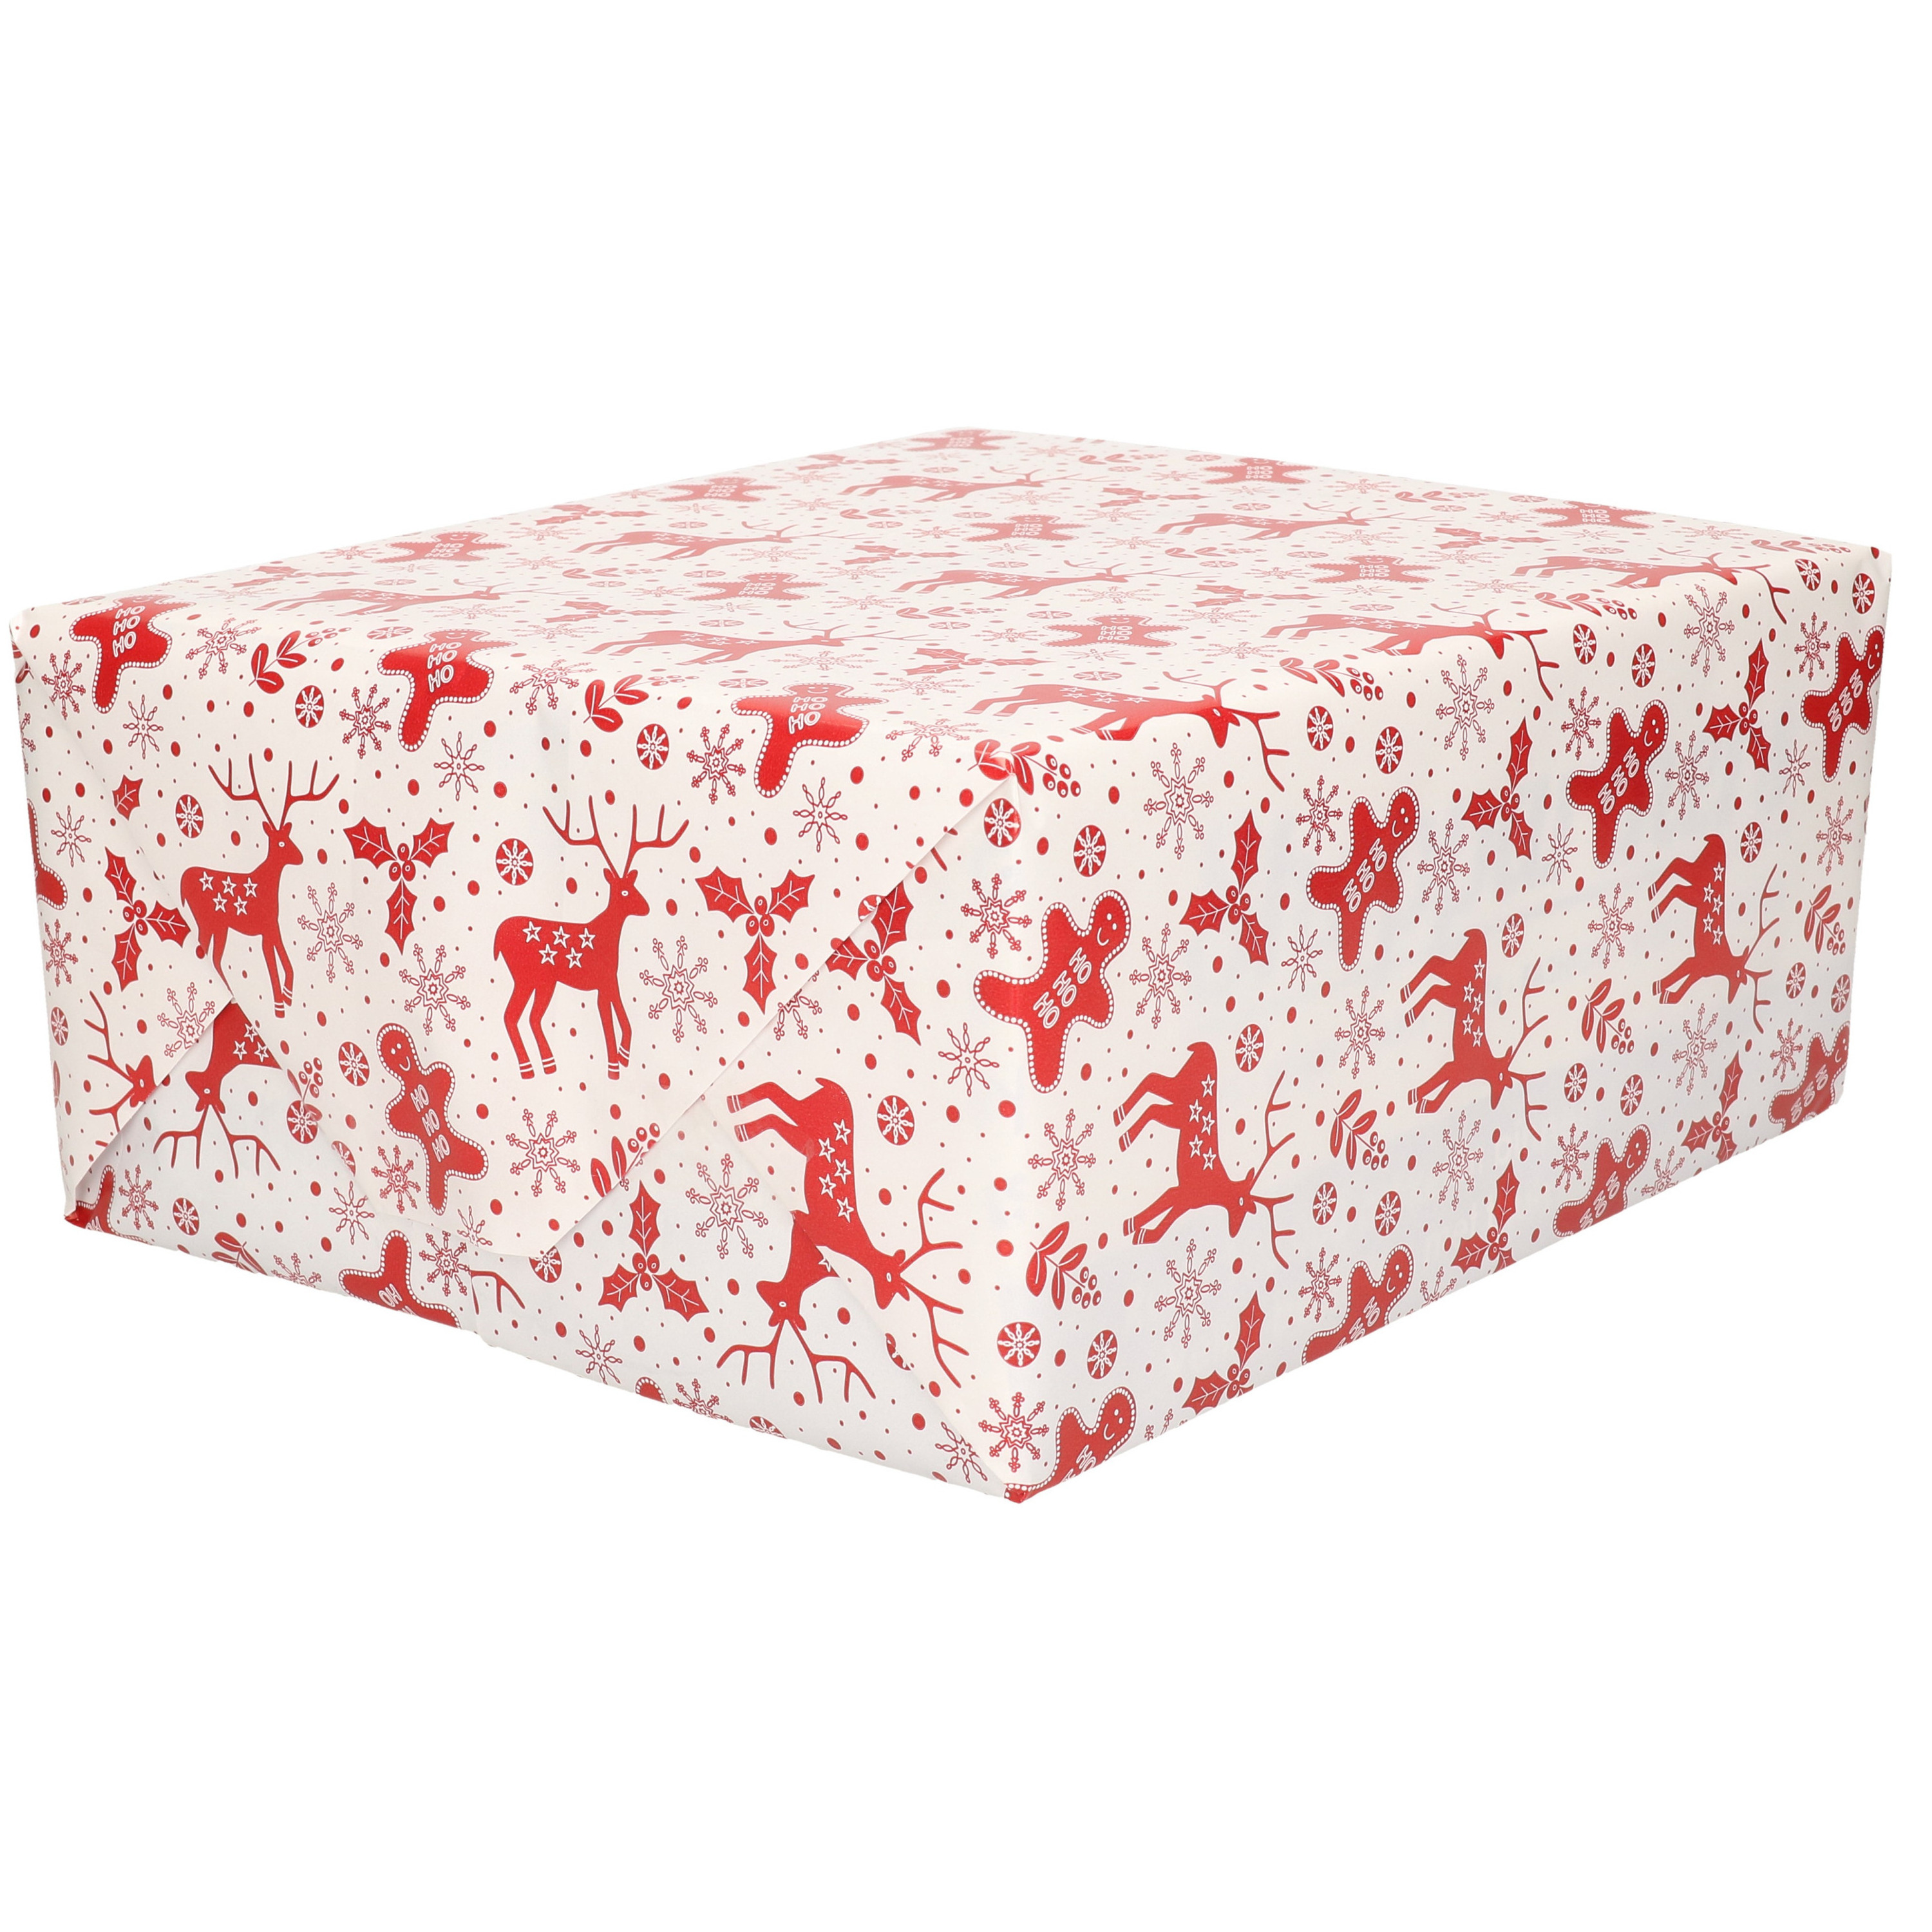 2x Rollen Kerst inpakpapier/cadeaupapier wit/rood 2,5 x 0,7 meter